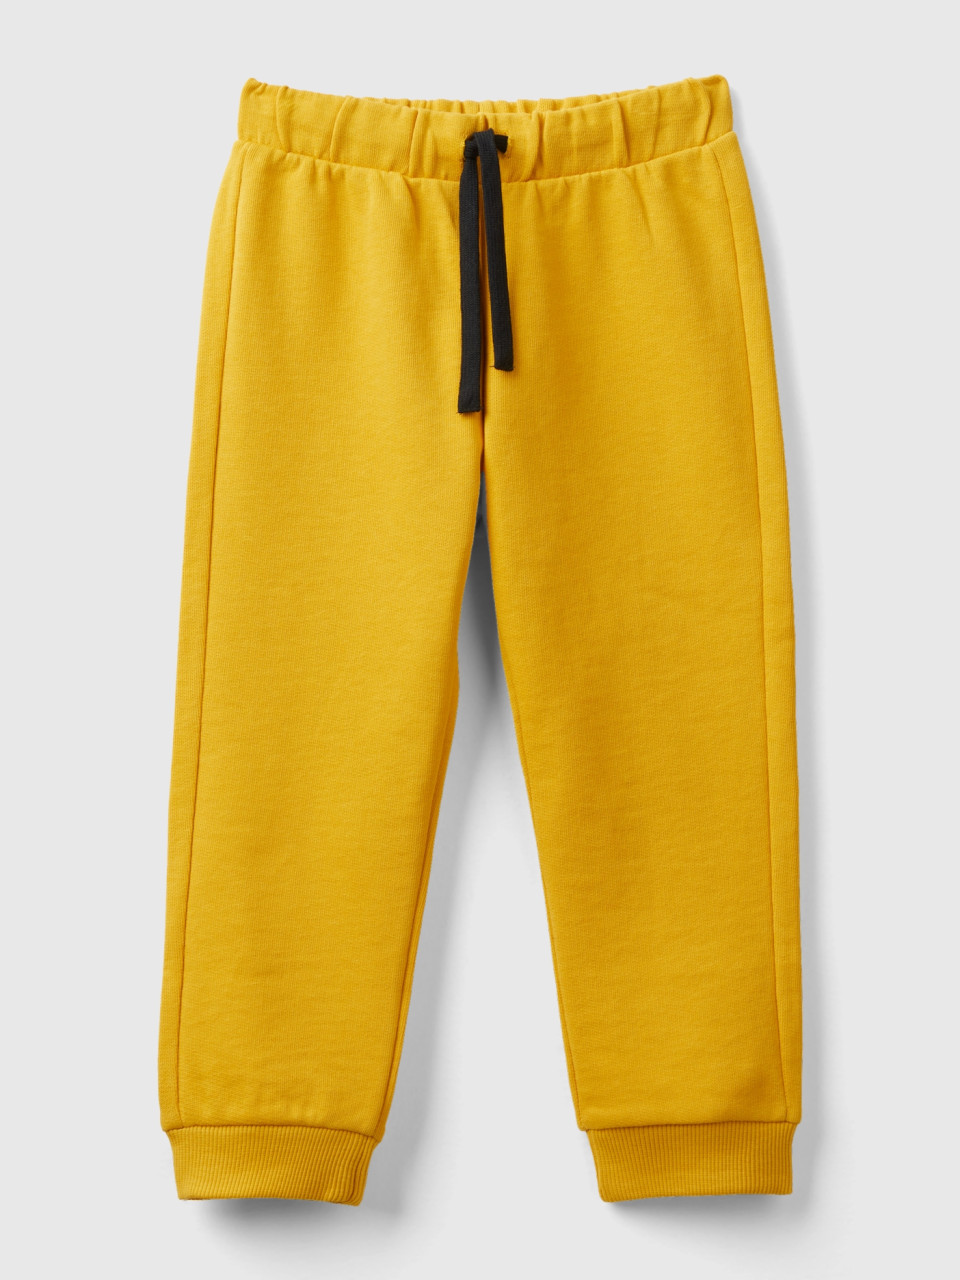 Benetton, Sweatpants With Pocket, Yellow, Kids